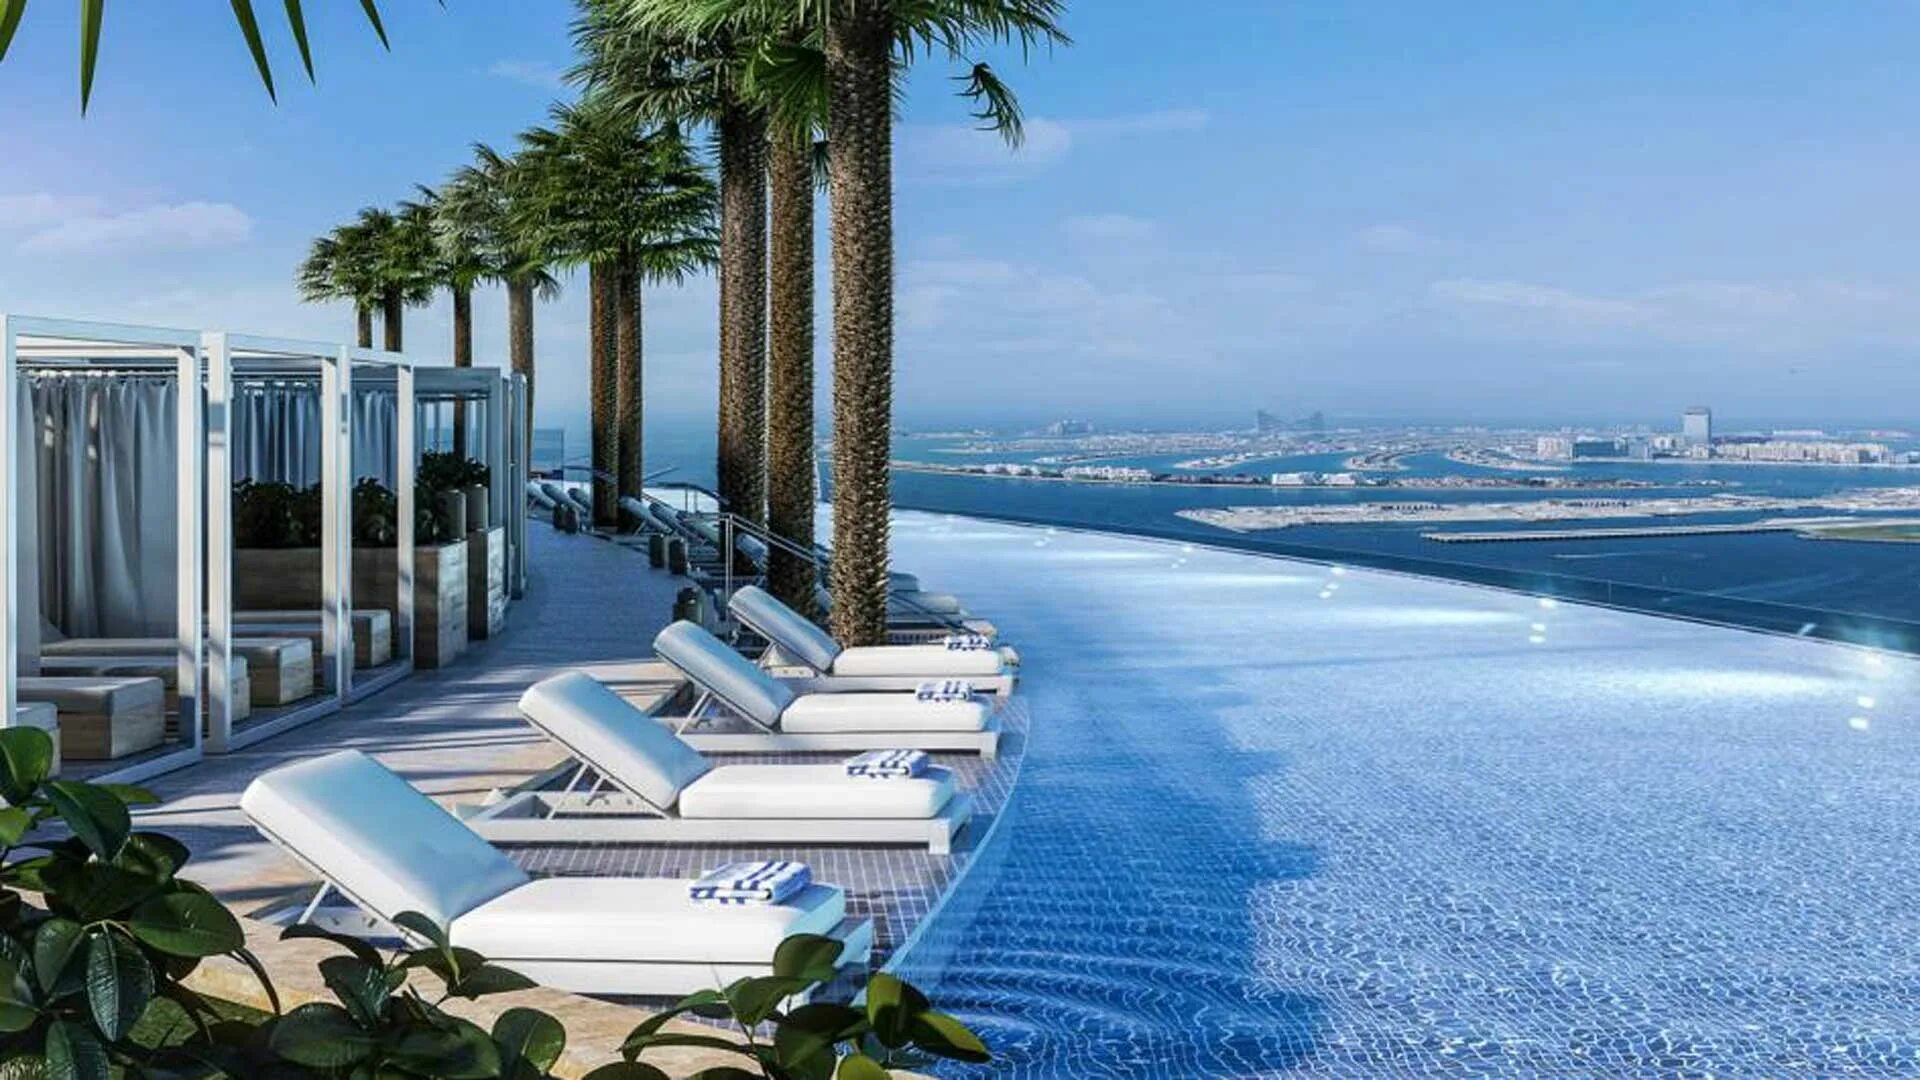 Address Beach Resort Дубай. Address Beach Resort 5 Дубай. Jumeirah Beach Residence Дубай. Address Beach Resort Дубай бассейн. Address отель